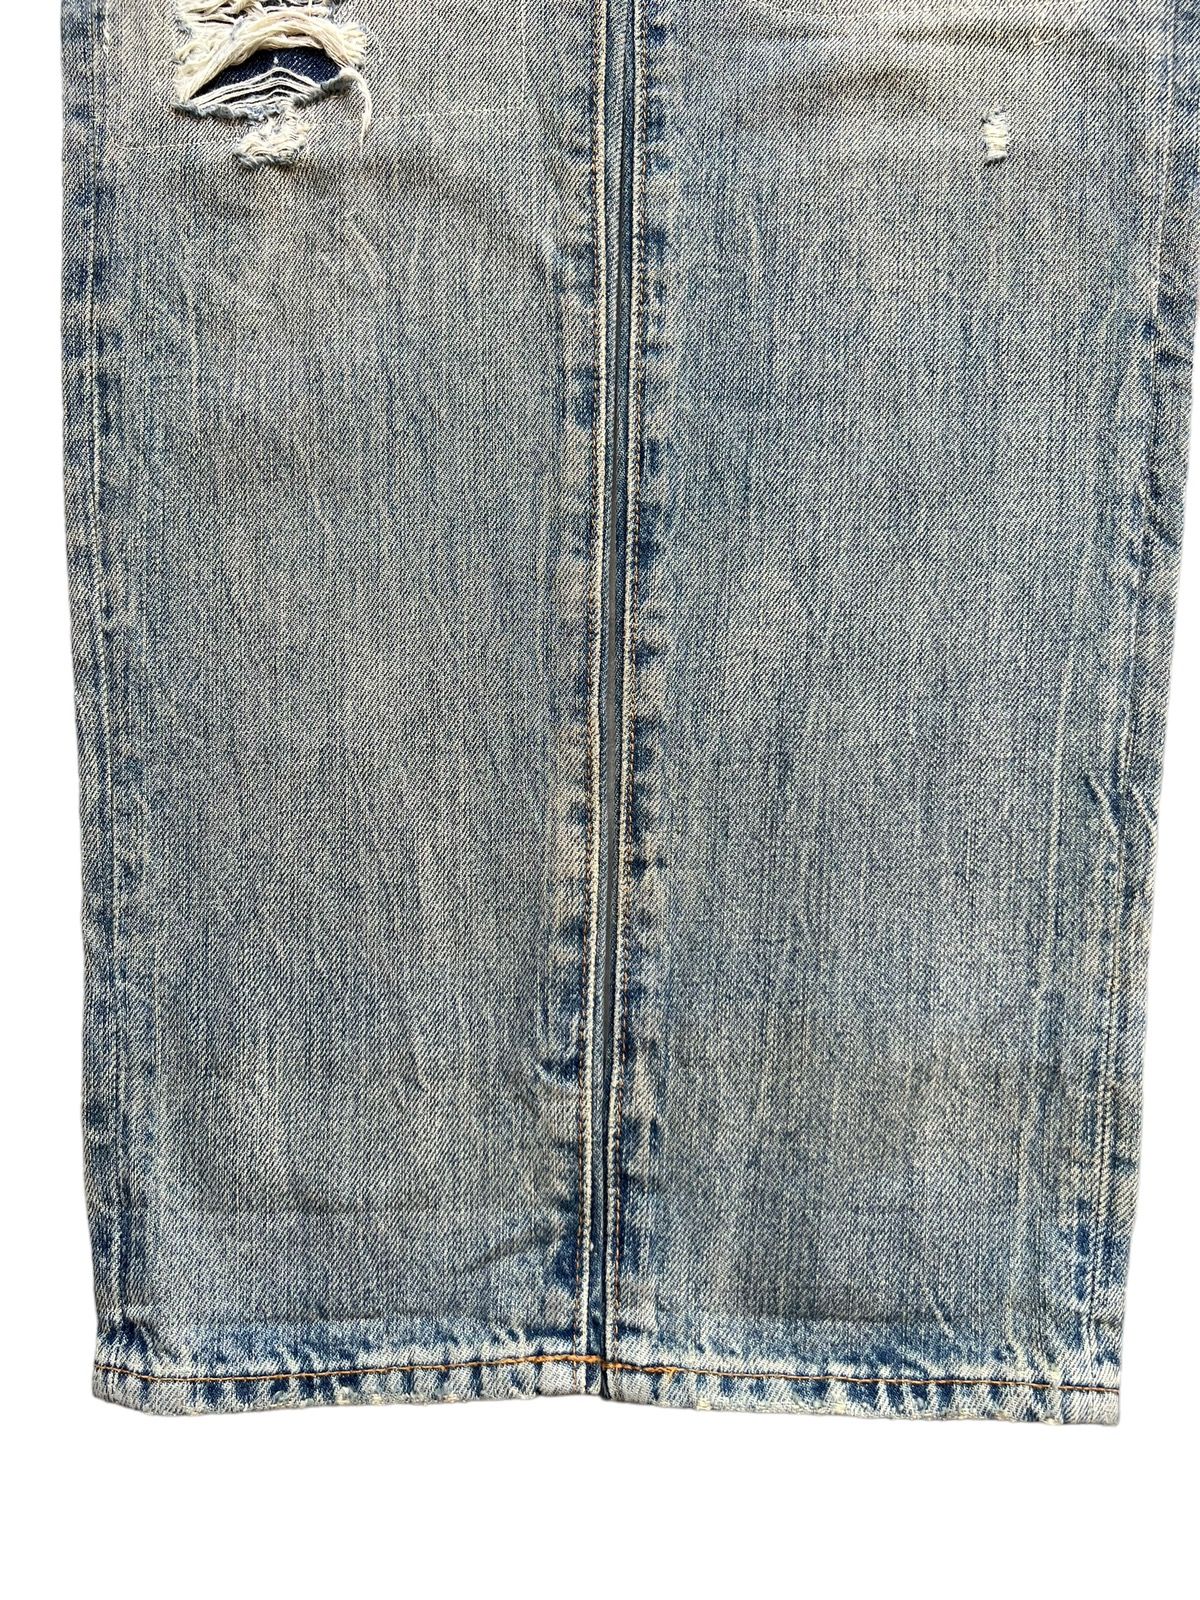 Ralph Lauren Rusty Ripped Distressed Denim Jeans 28x29 - 5